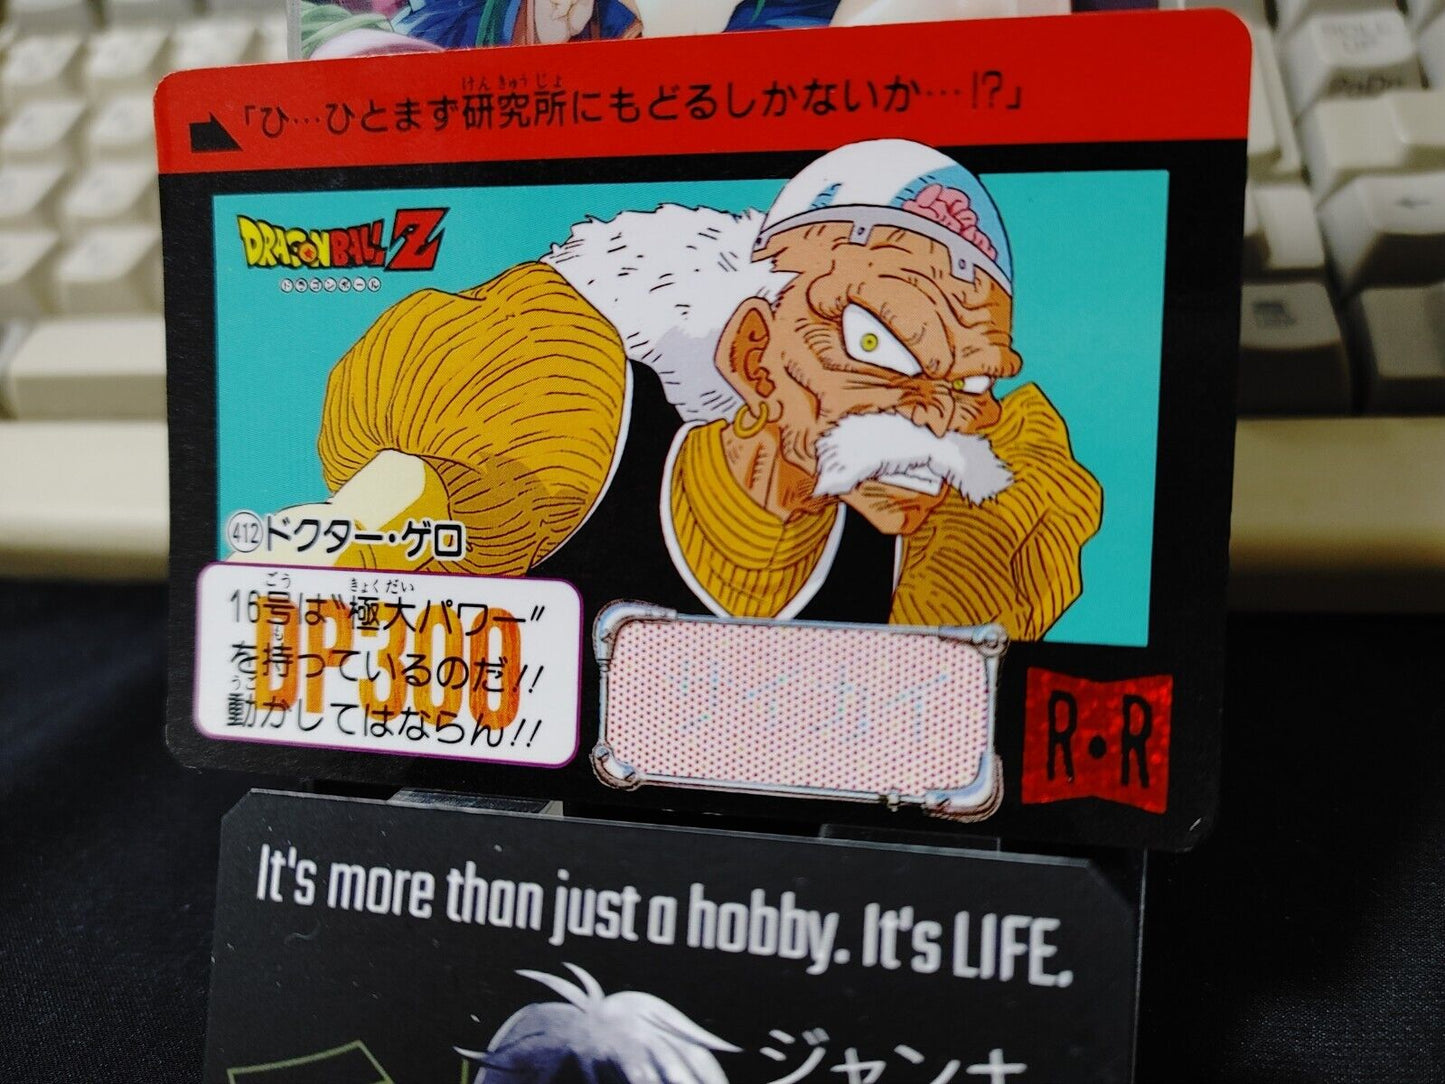 Dragon Ball Z Bandai Carddass Card Android #412 Japanese Retro Vintage TCG Japan